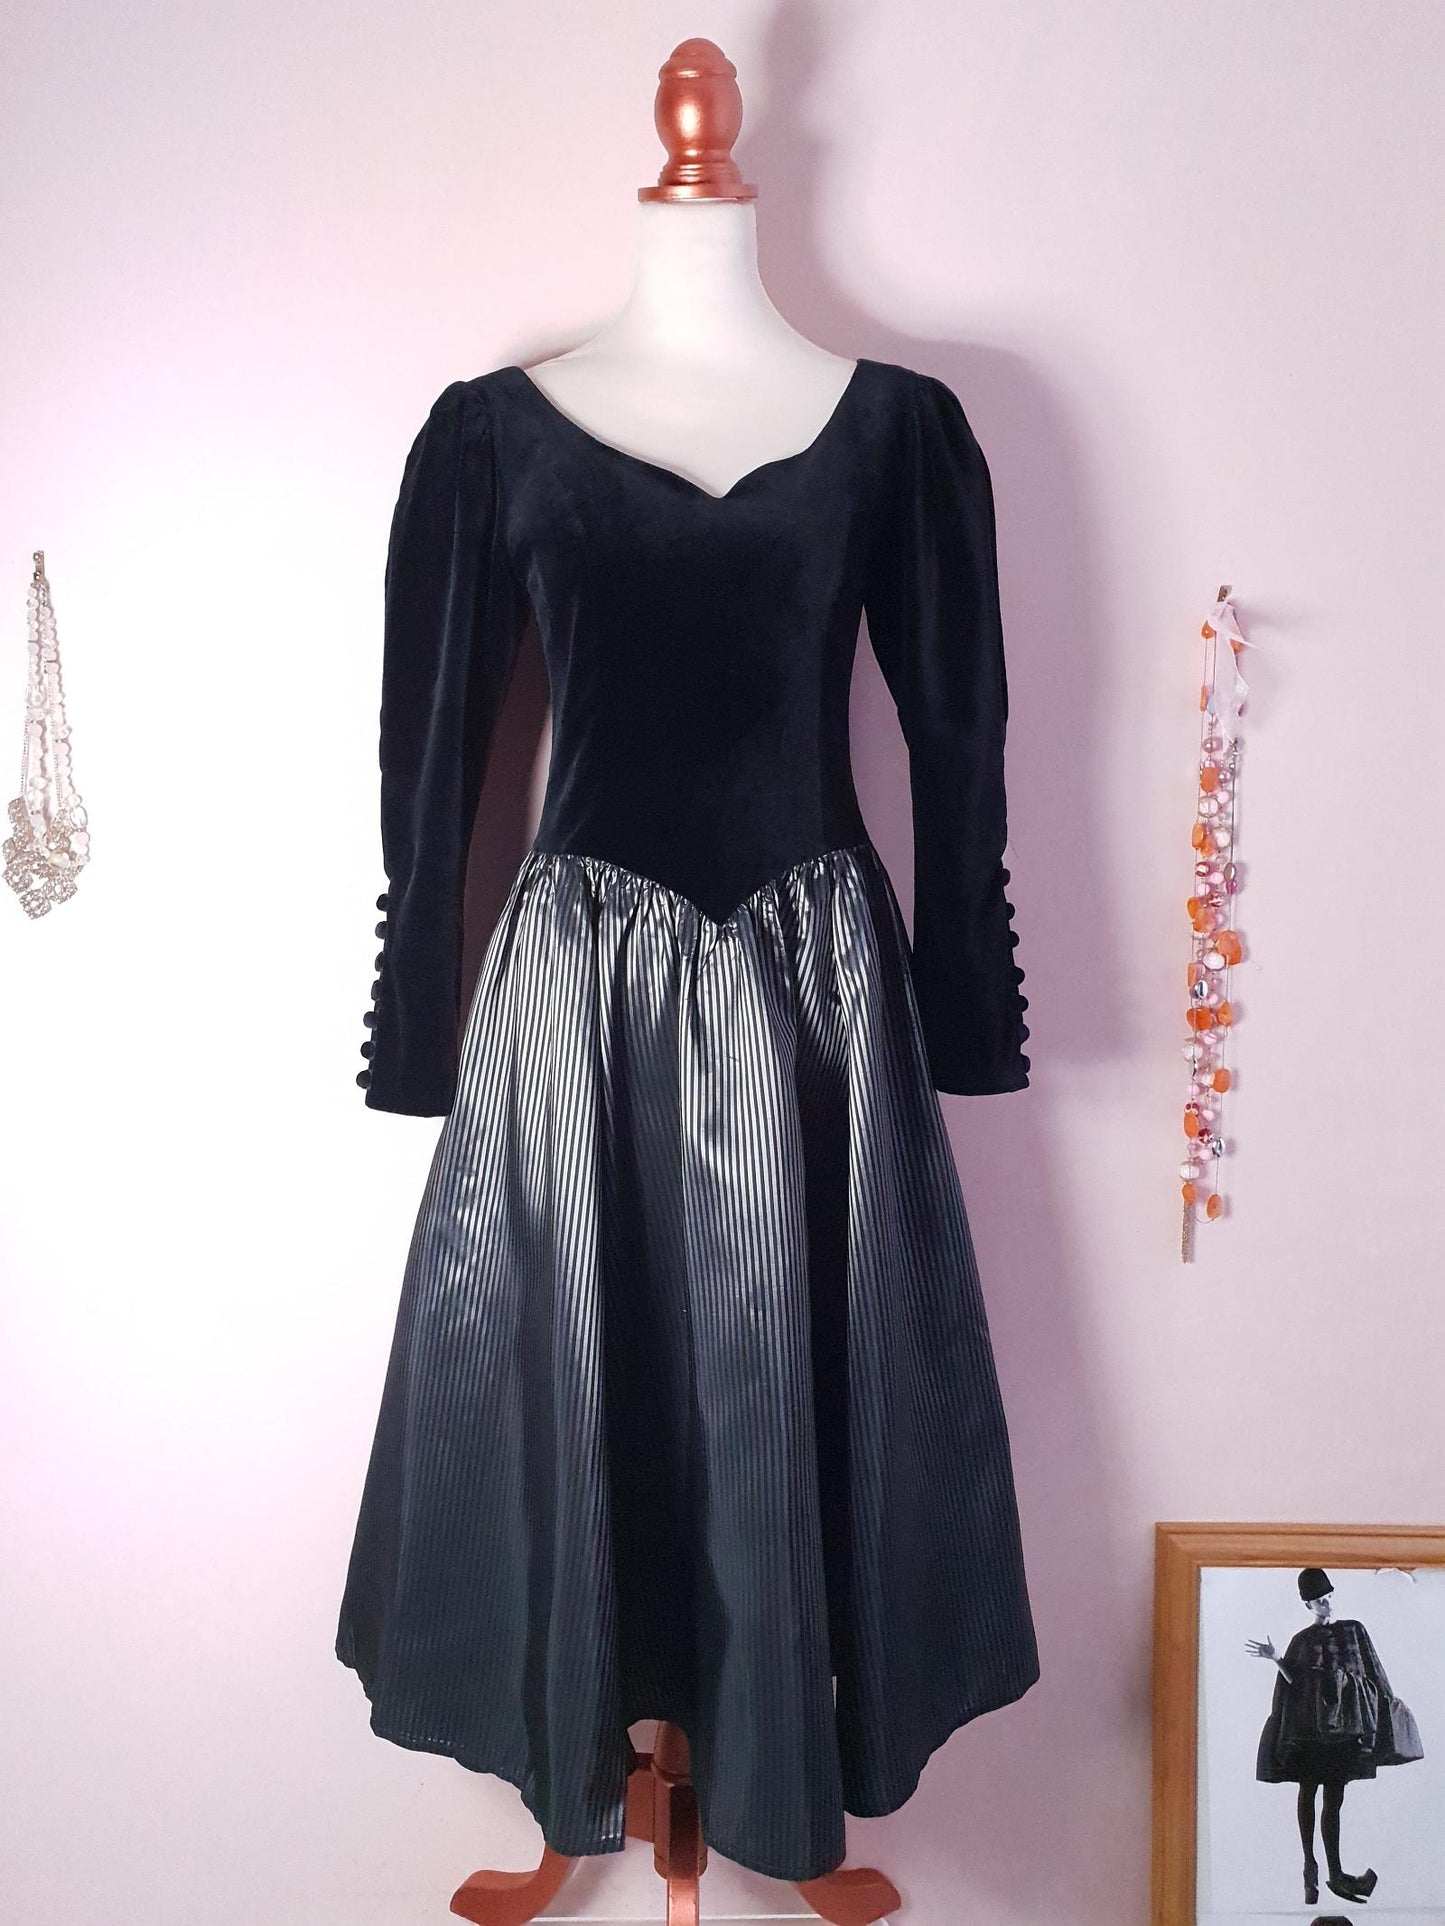 Fabulous Vintage 1980s Laura Ashley Black Velvet and Taffeta Dress - Size 8/10